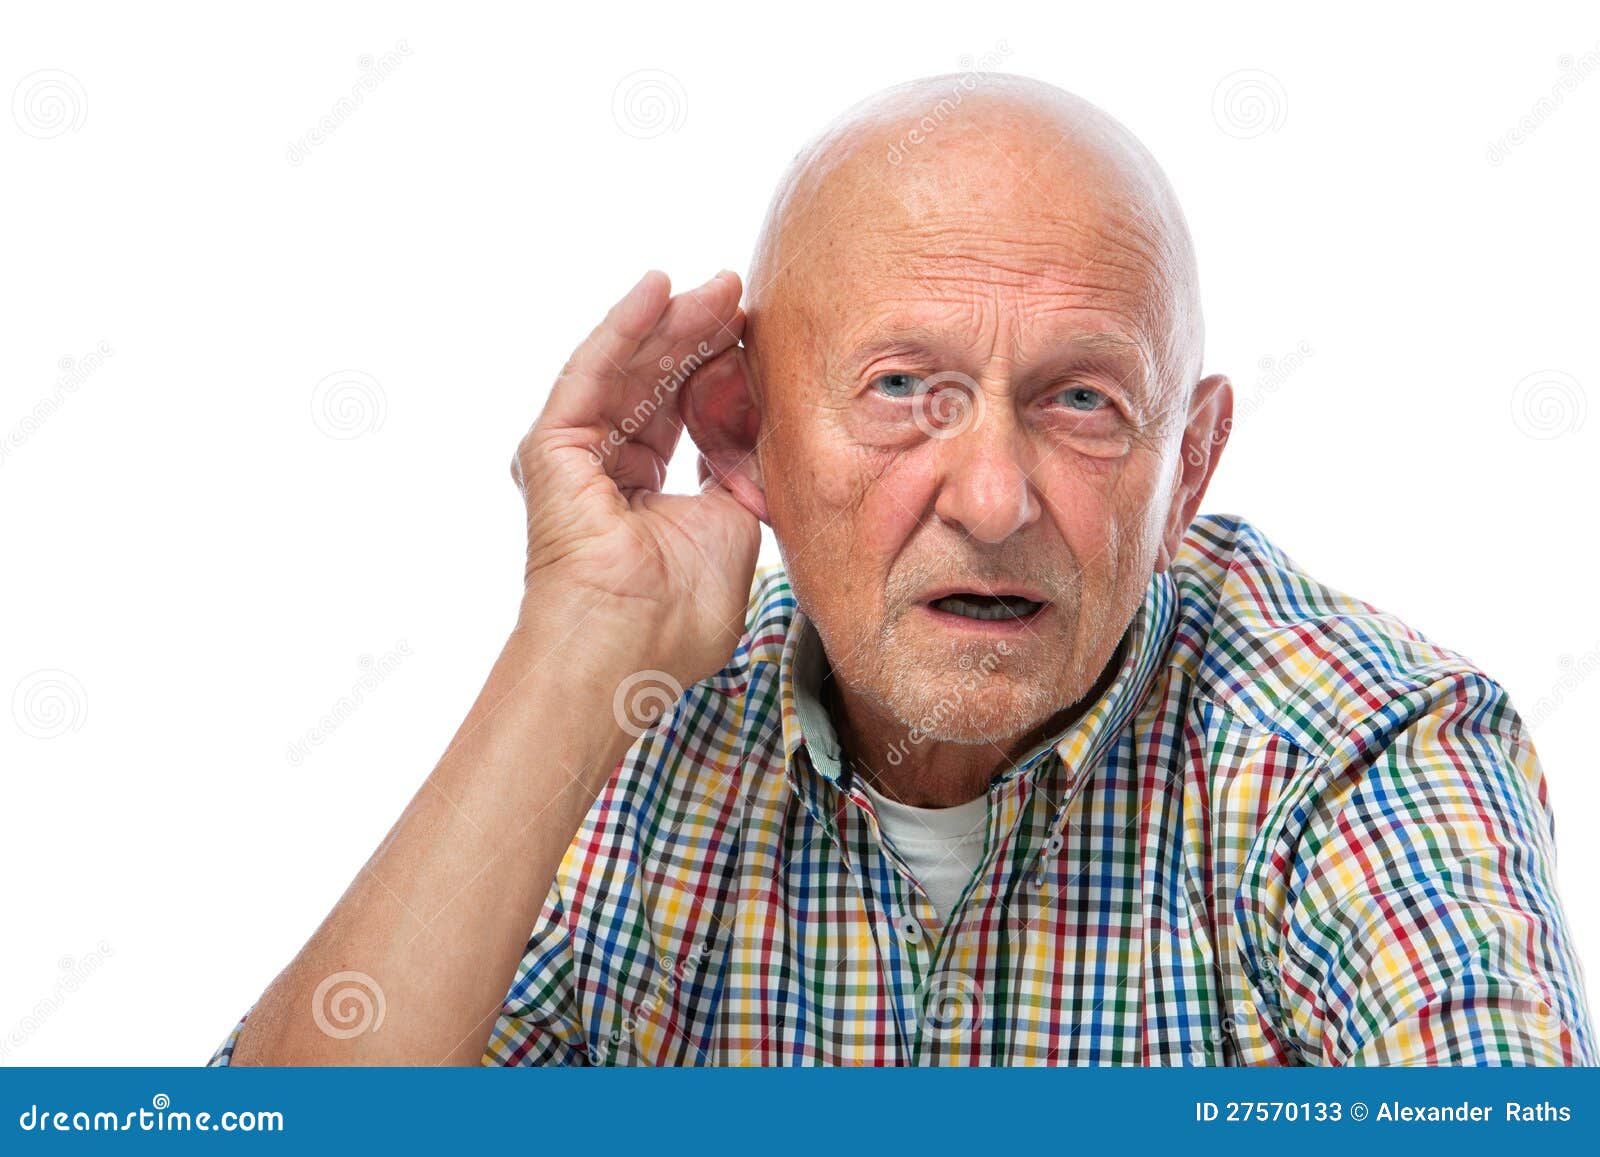 Hearing Loss in the Elderly